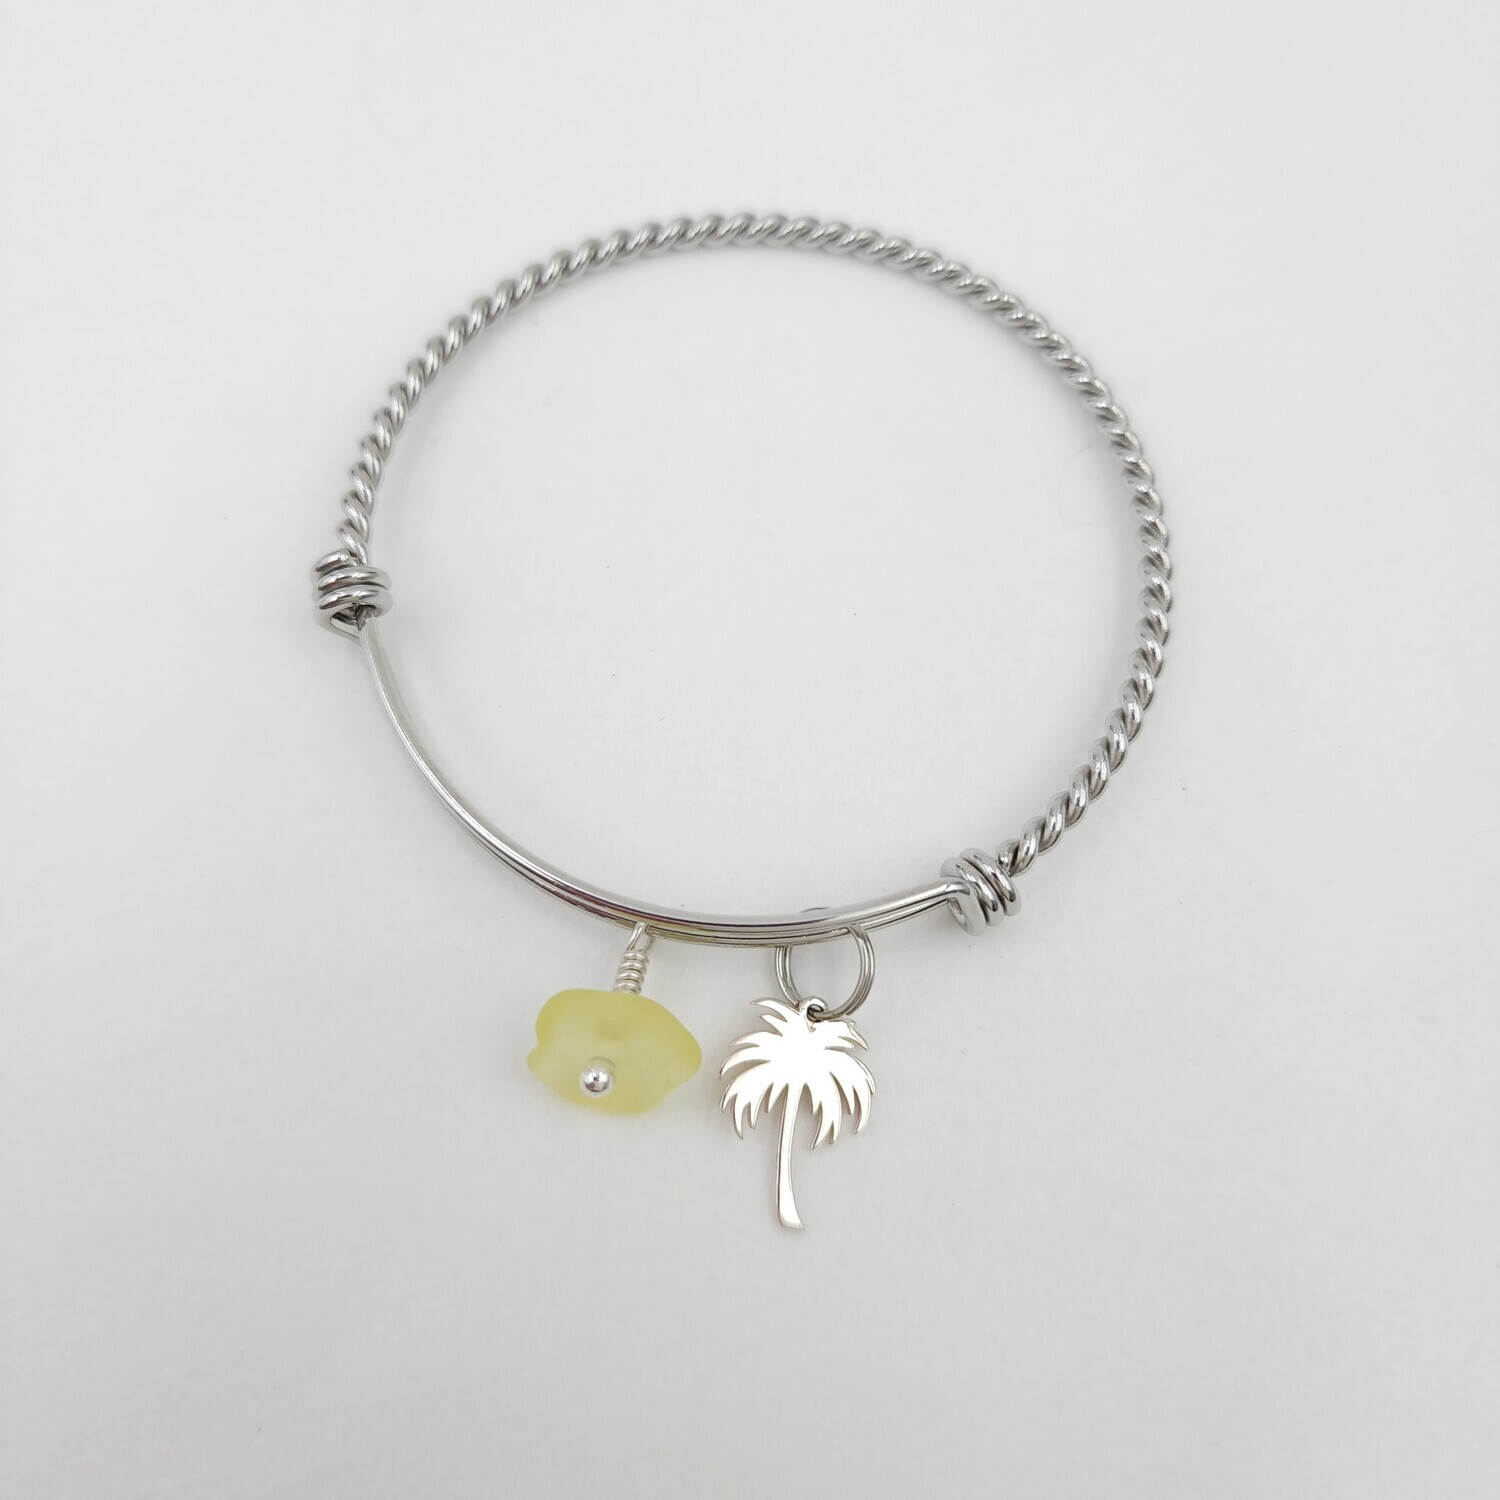 Twisted Bangle Bracelet with Palm Tree Charm and UV Yellow Lake Erie Beach Glass